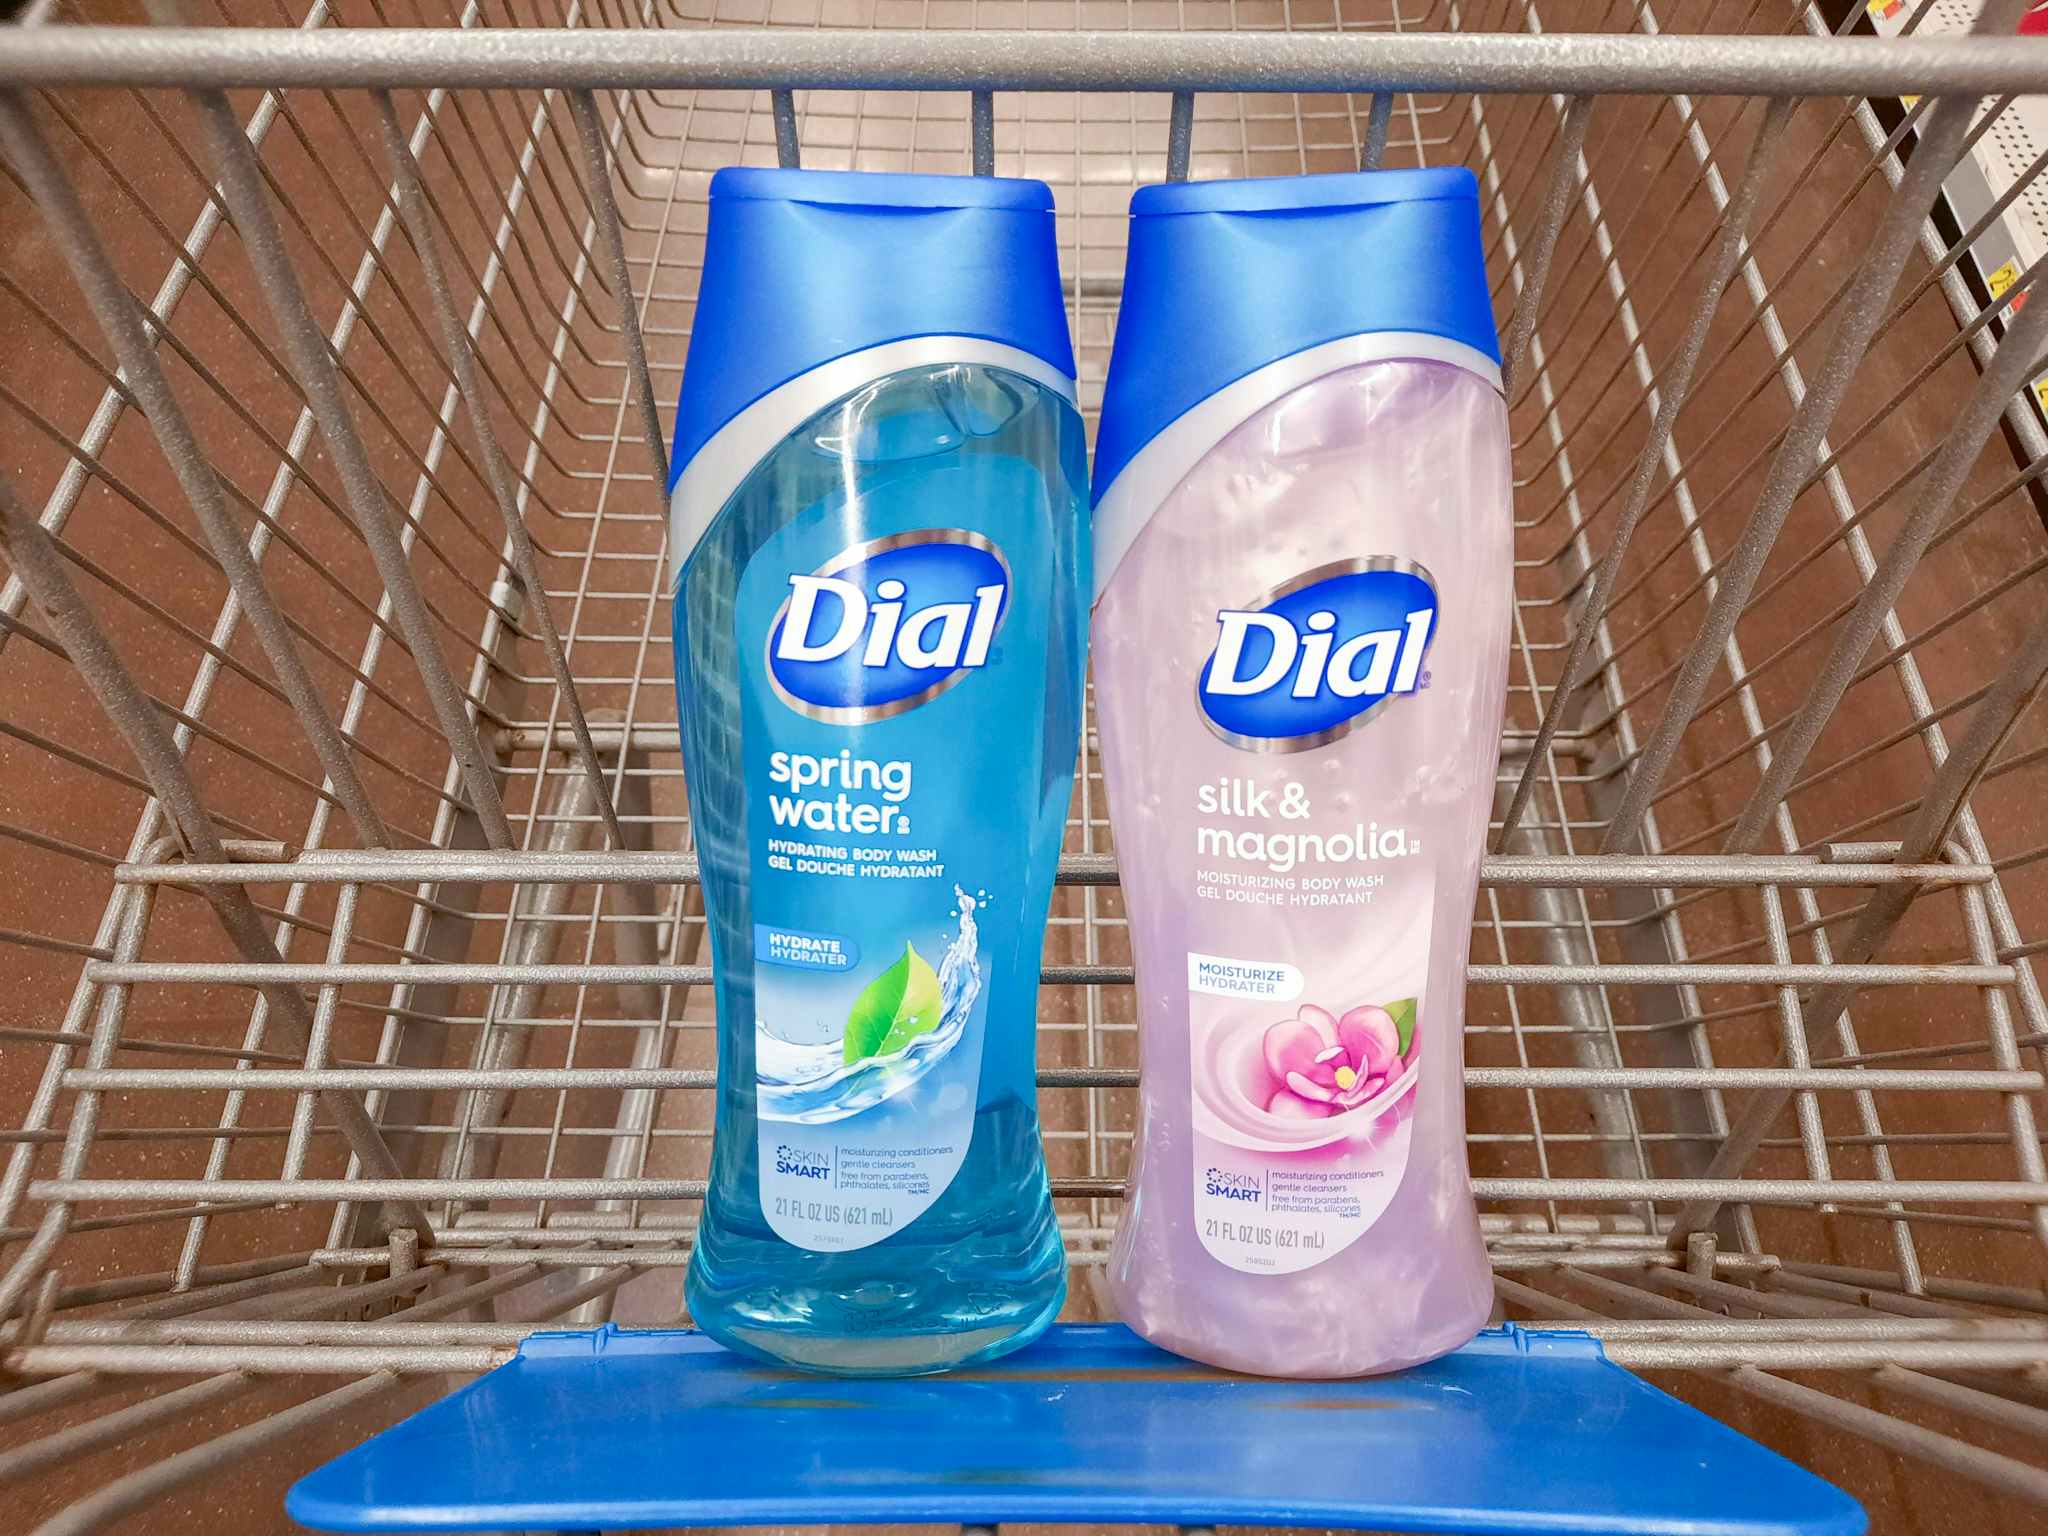 Two bottles of Dial Body Wash in Walmart shopping cart